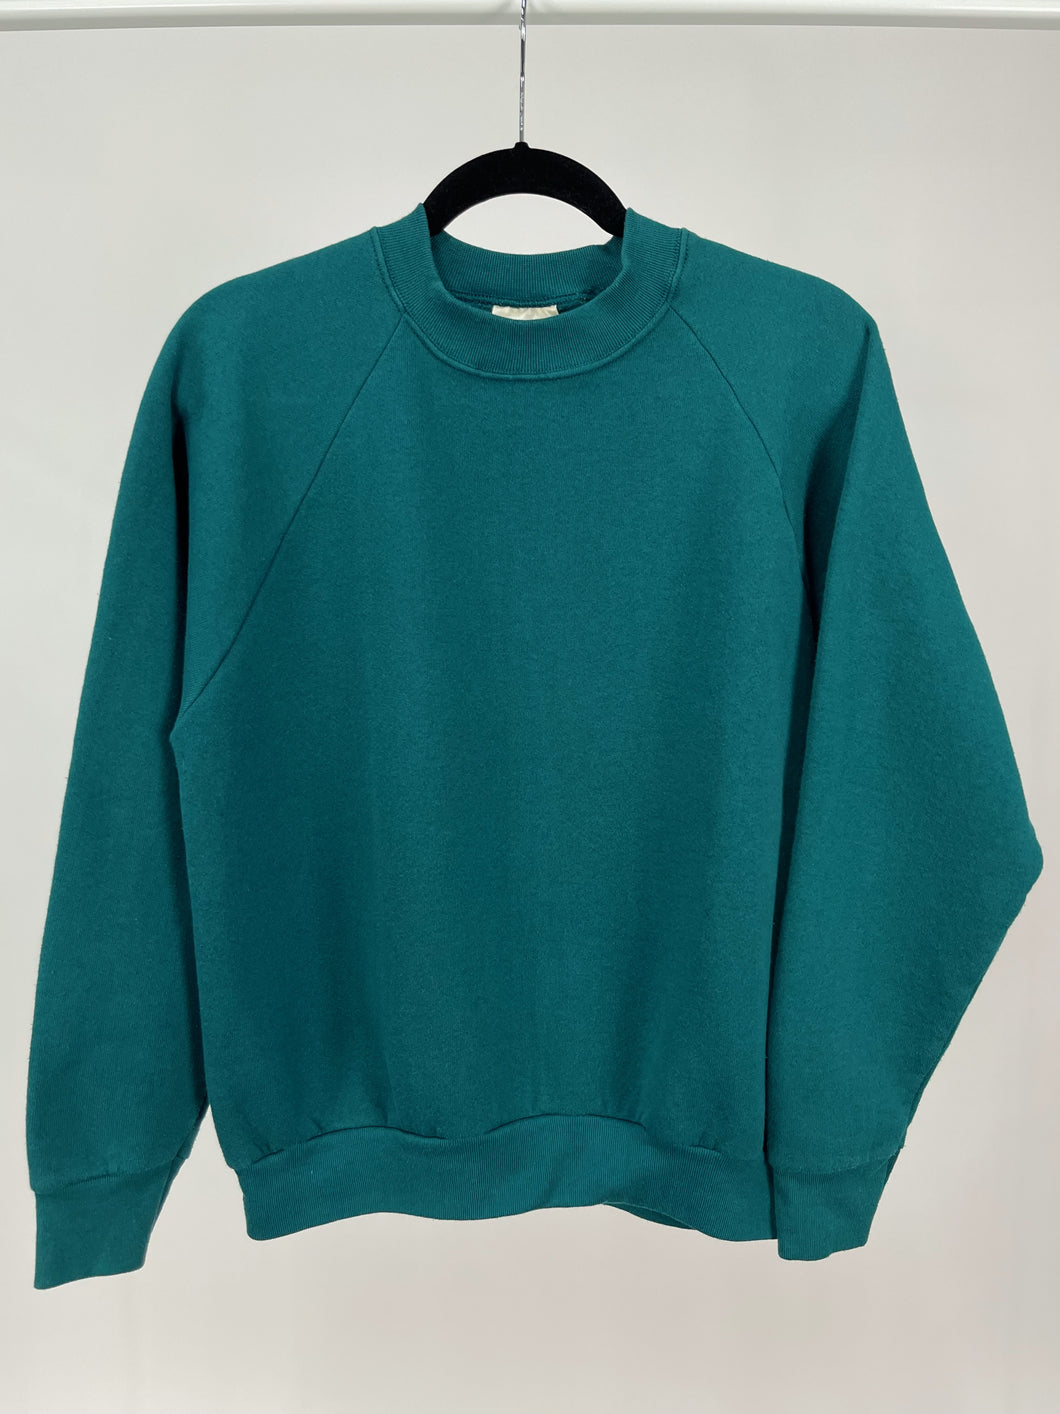 90's Green High Neck Sweatshirt (M)